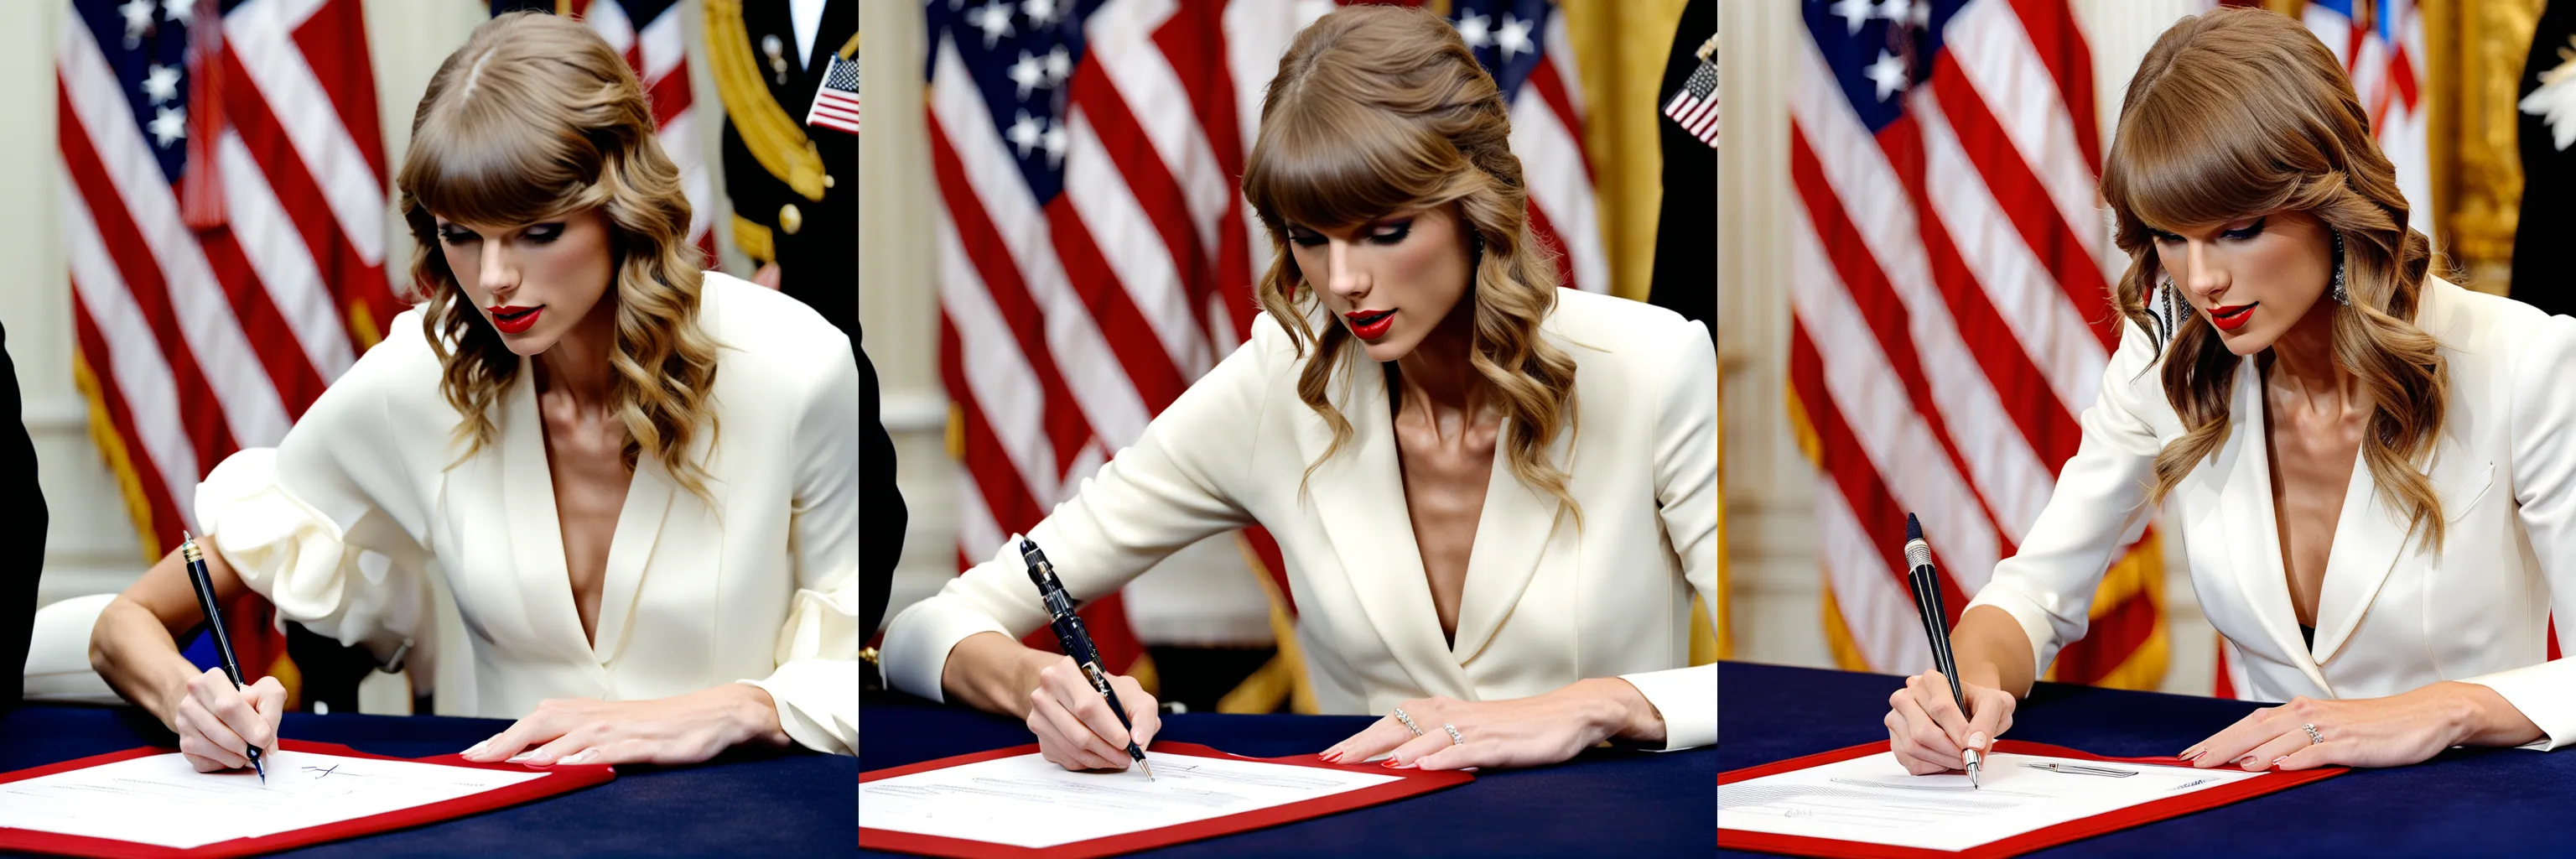 USA President Taylor Swift (signing papers)++++, photo taken by the Associated Press - Президент США Тейлор Свифт (подписание документов)++++, фото Associated Press